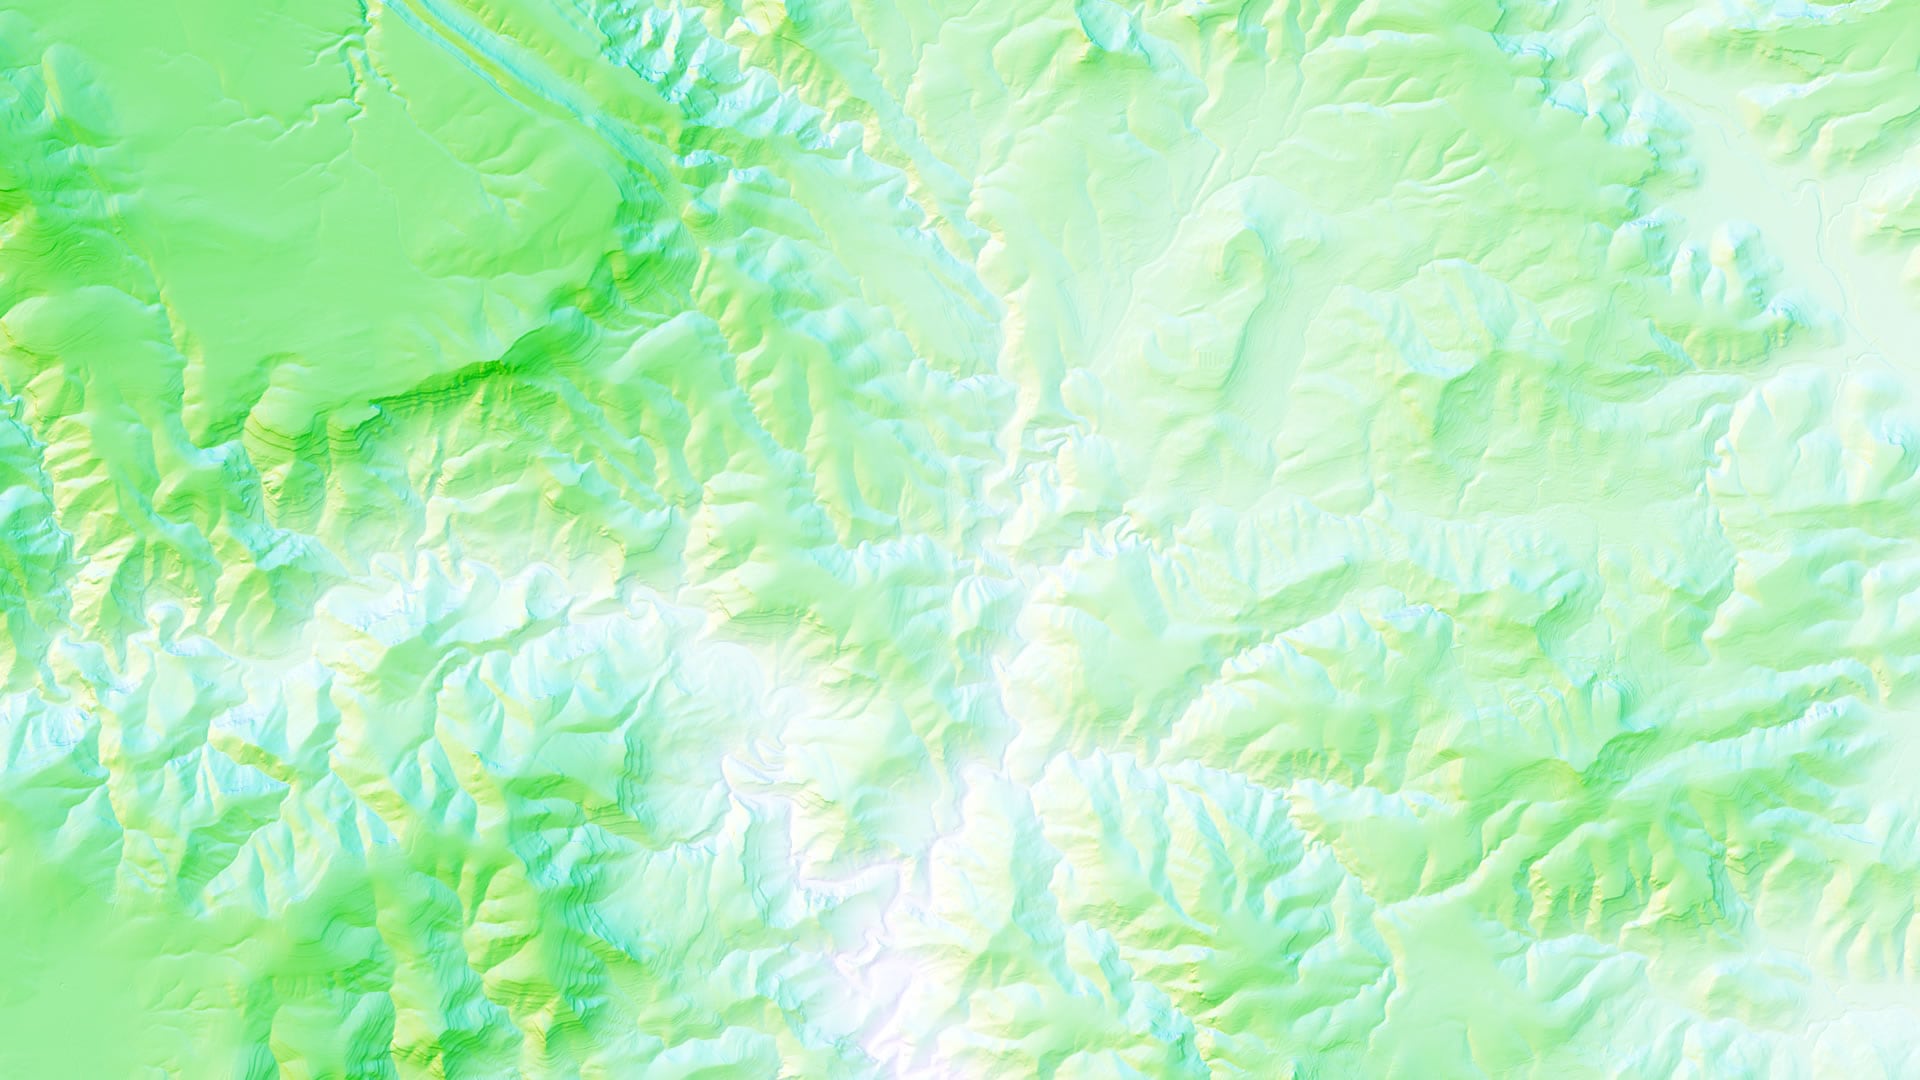 Multi-hue hillshade in greens